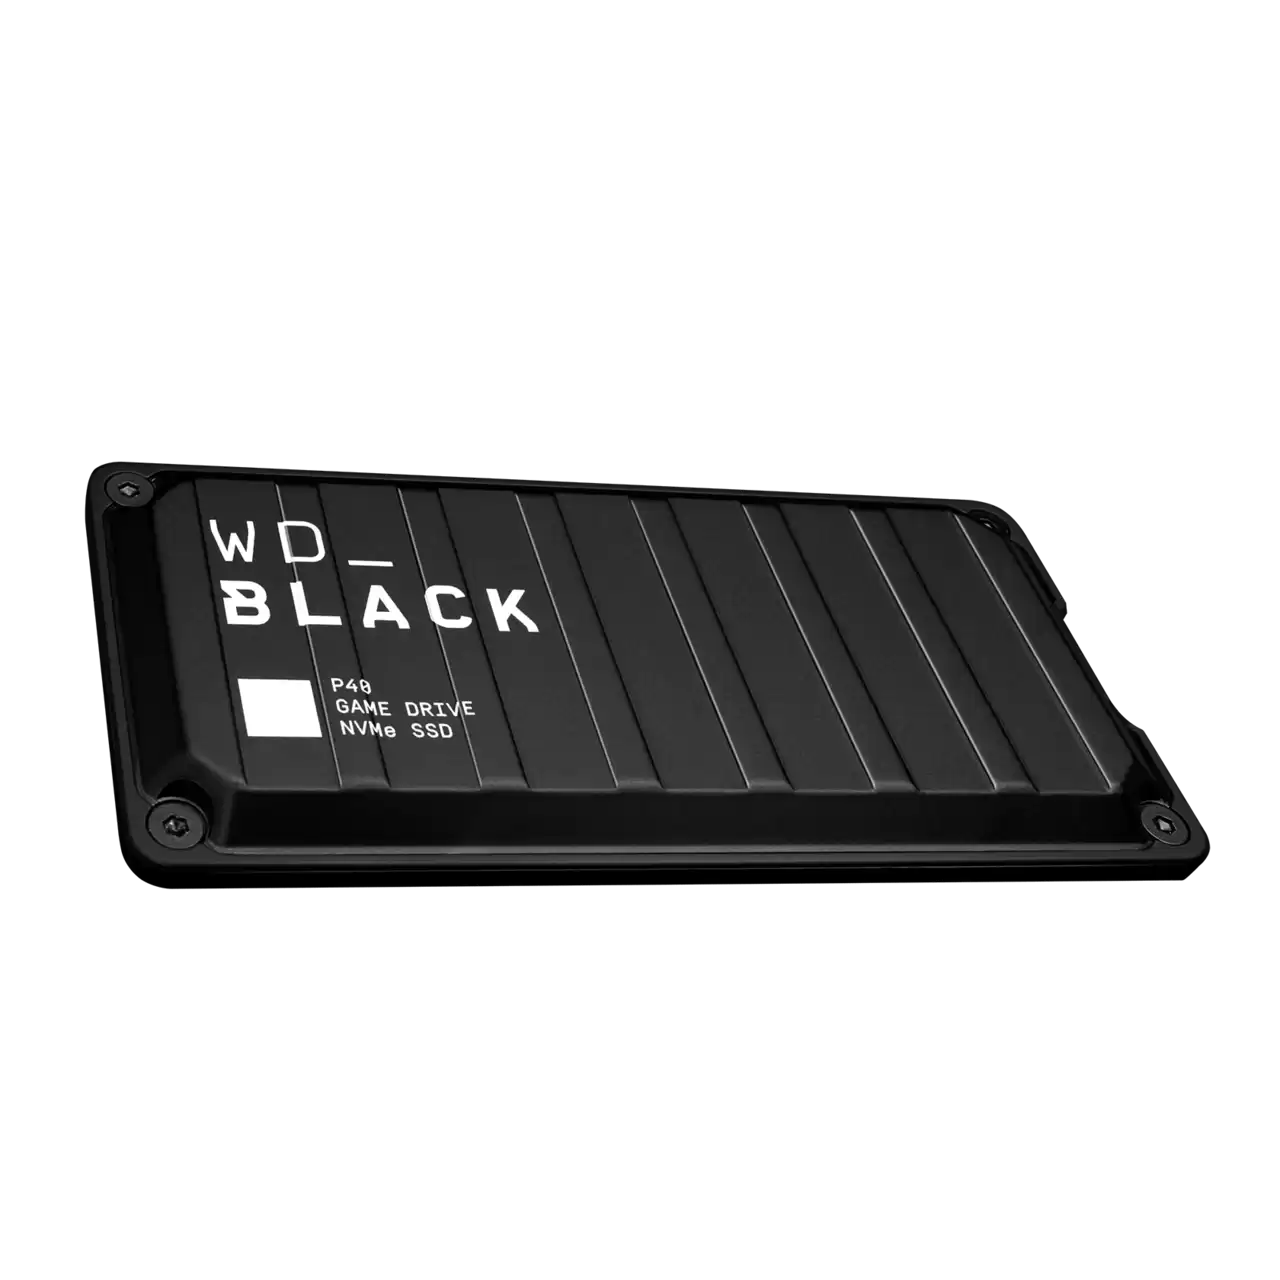 Hard disk ssd western digital wd black p40 game drive 1tb